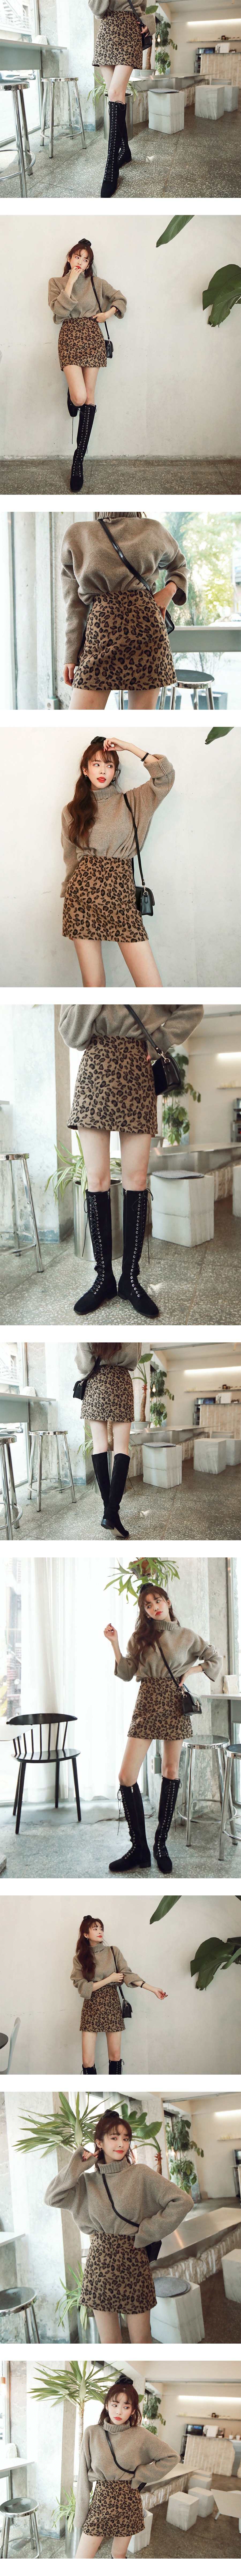 SSUMPART High Rise Leopard Mini Skirt #Brown M(27-28)